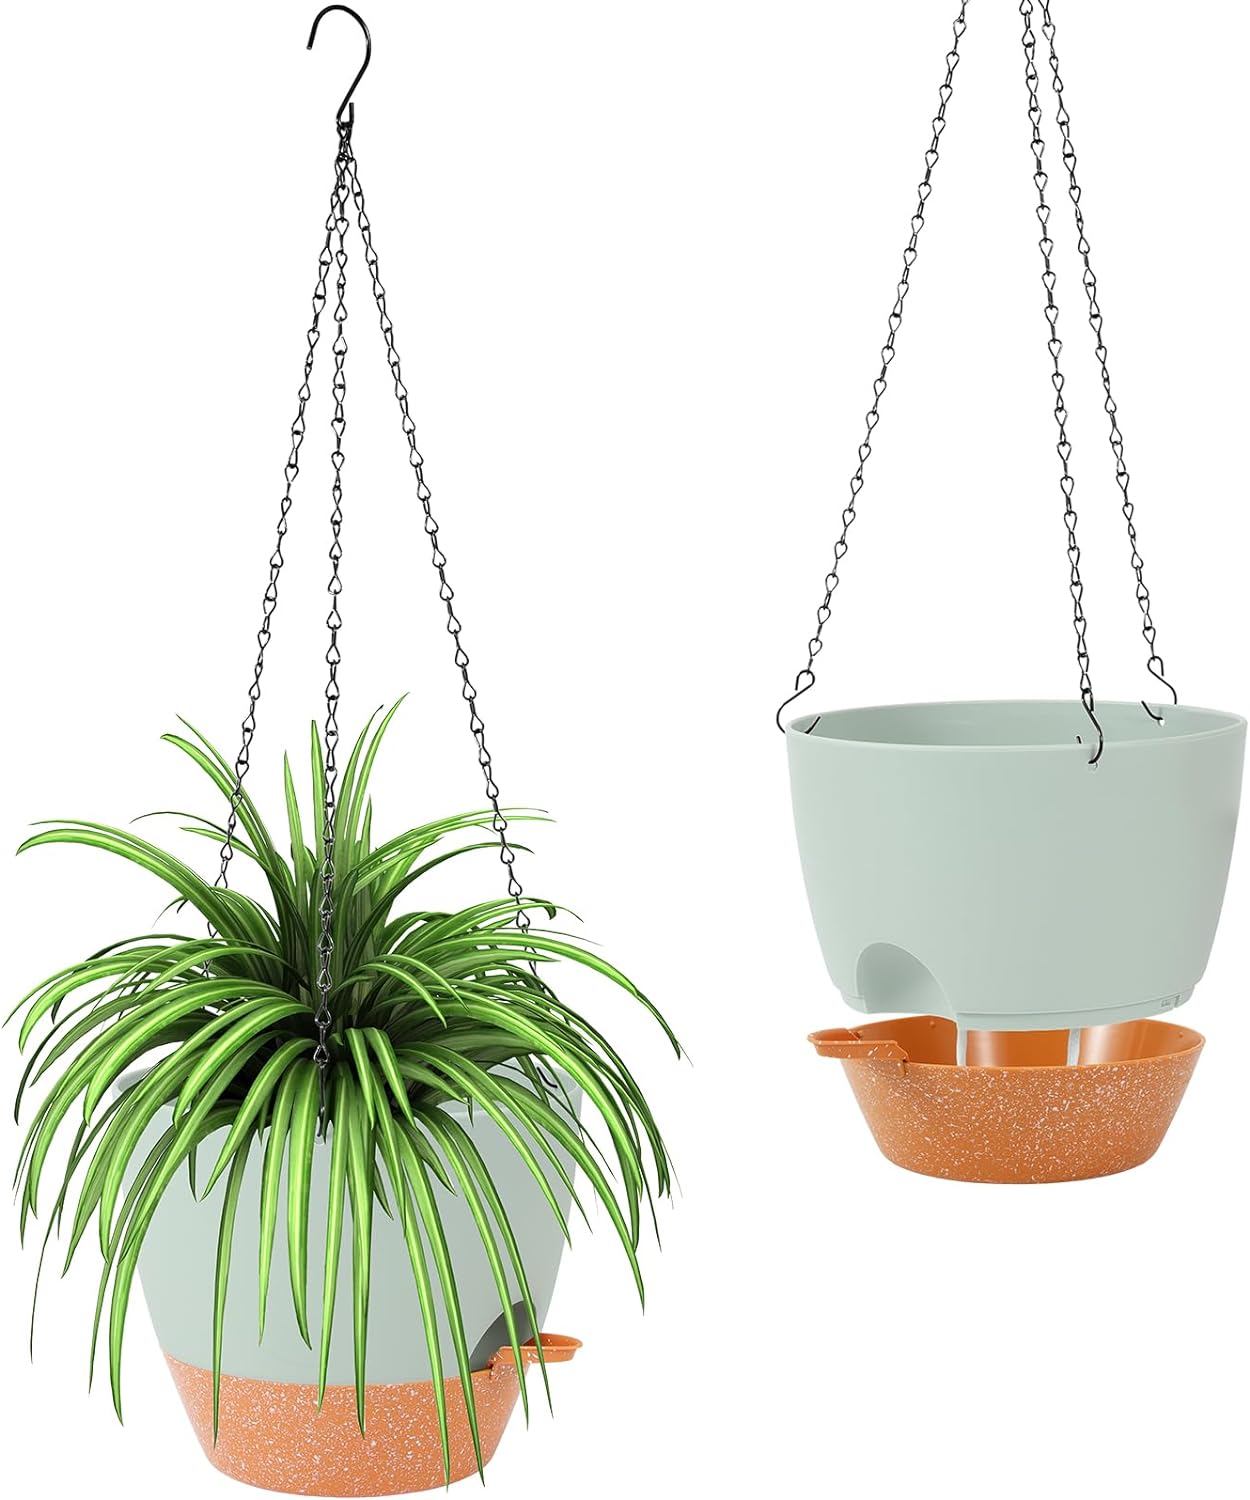 GARDIFE Hanging Planter, 10 inch Hanging planters for Indoor. Outdoor Plants, Self Watering Plant Pot, 2 Pack Large self Watering Hanging Planter, Green